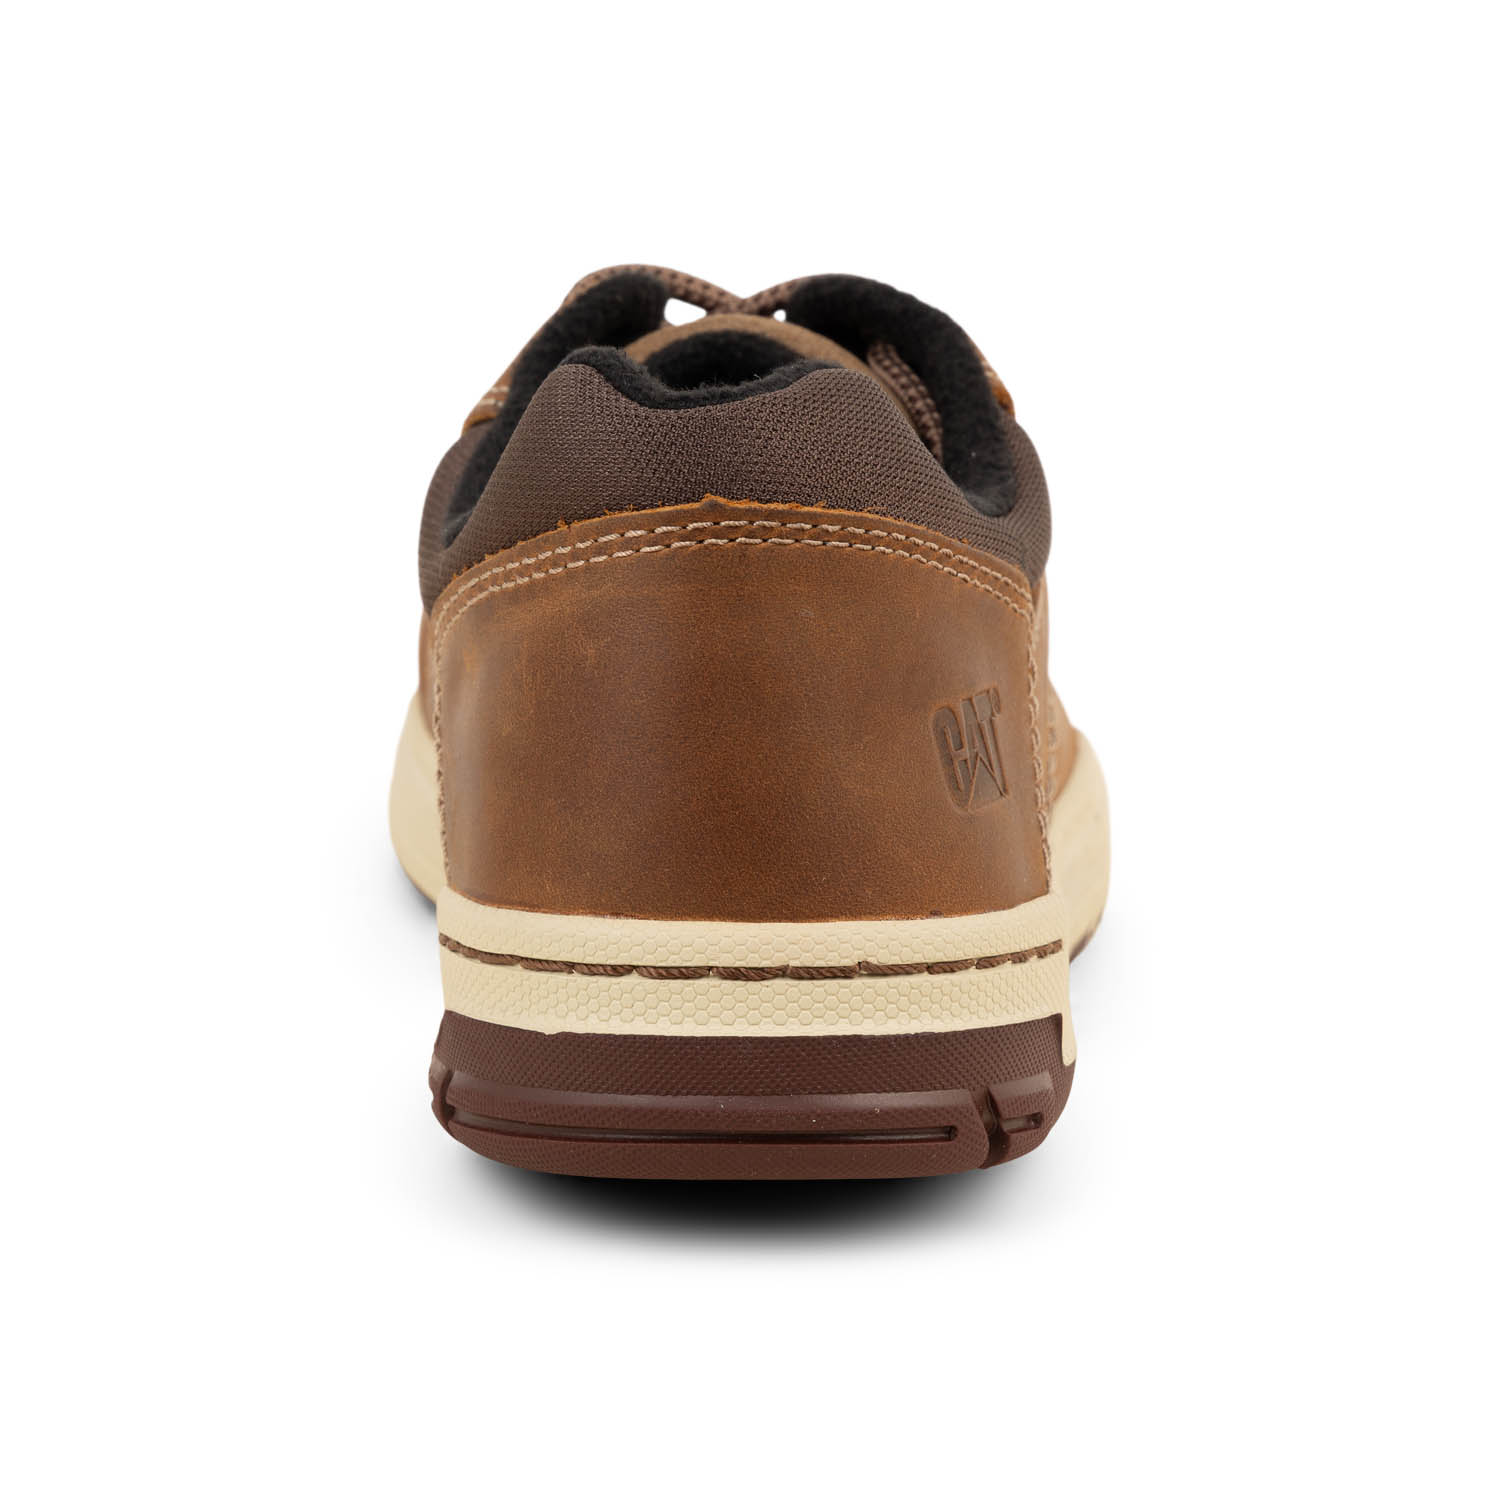 03 - COLFAX LOW - CATERPILLAR - Chaussures à lacets - Nubuck